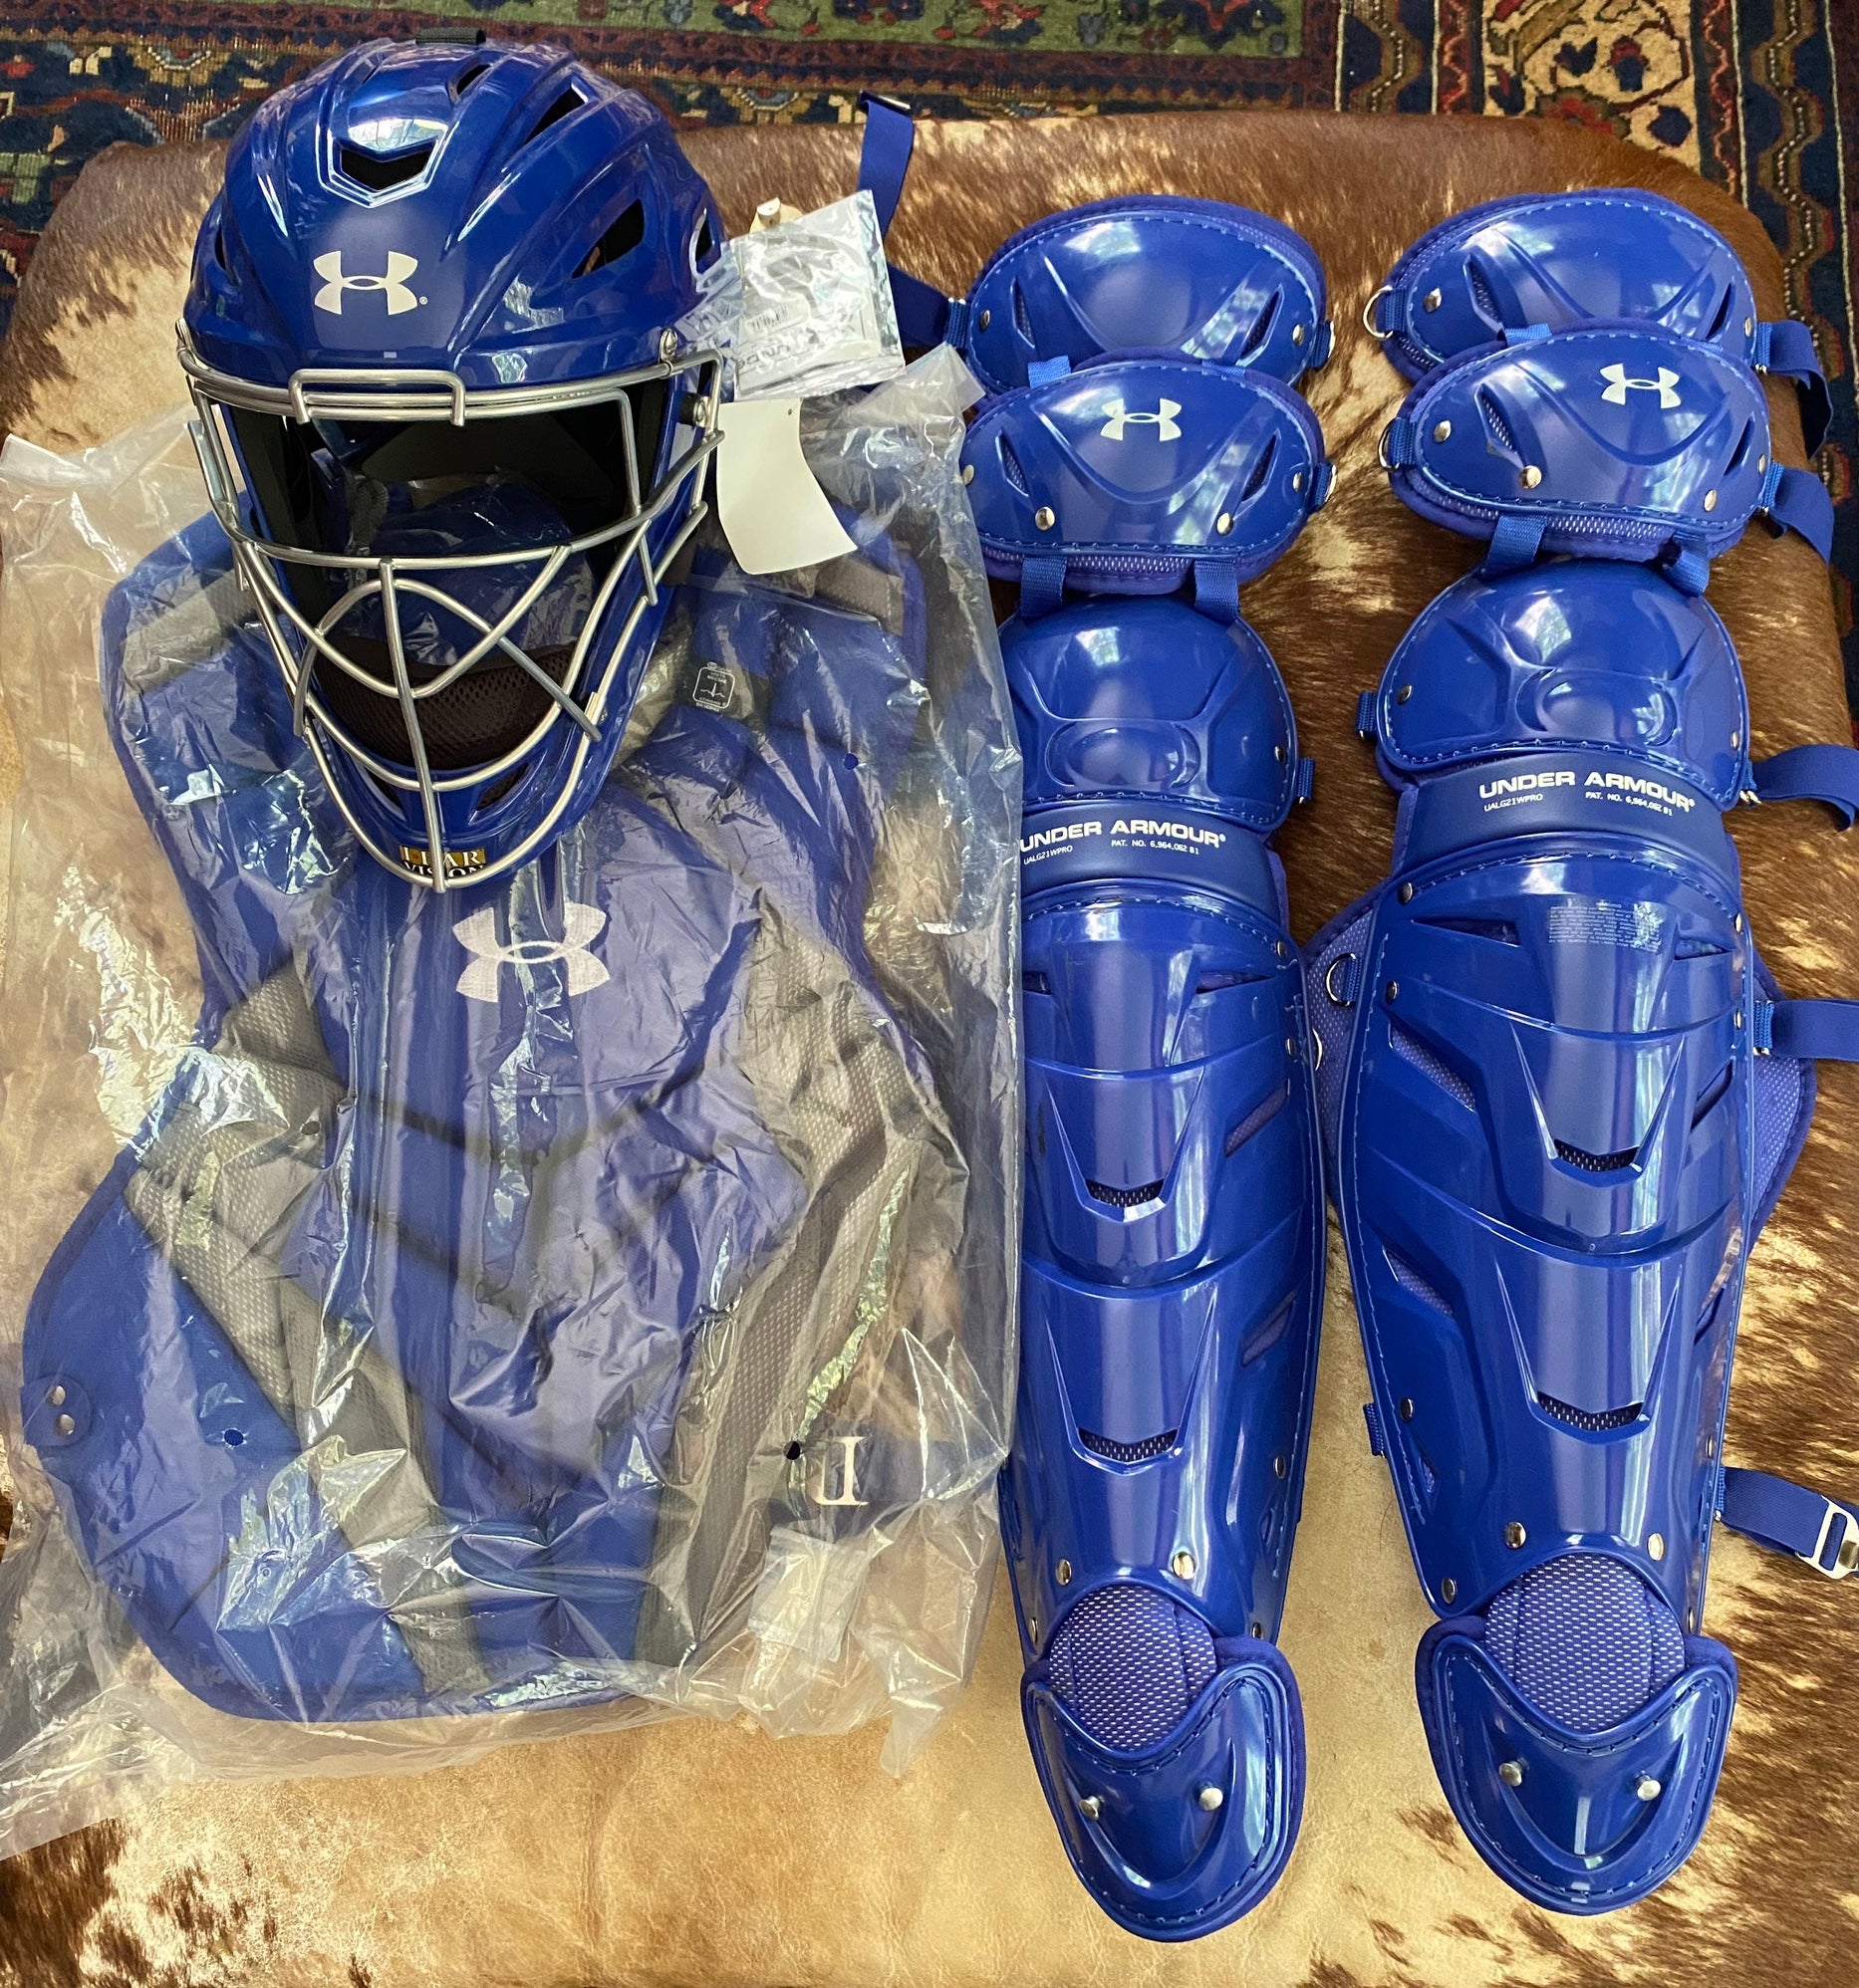 Under Armour Pro Series 6 Adult 16+ Baseball Catchers Gear Set - Royal Blue